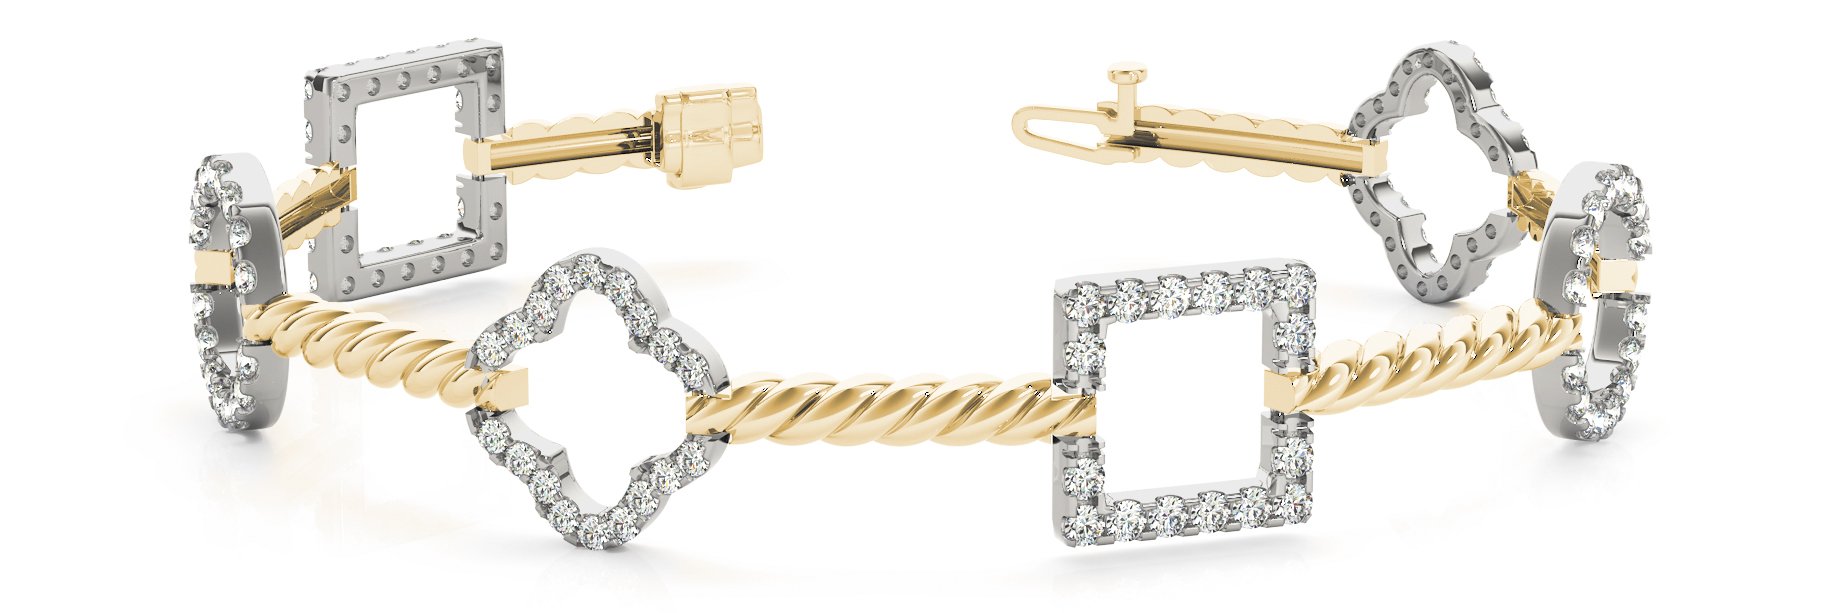 Fancy Diamond Bracelet Ladies 1.17ct tw - 14kt Yellow Gold